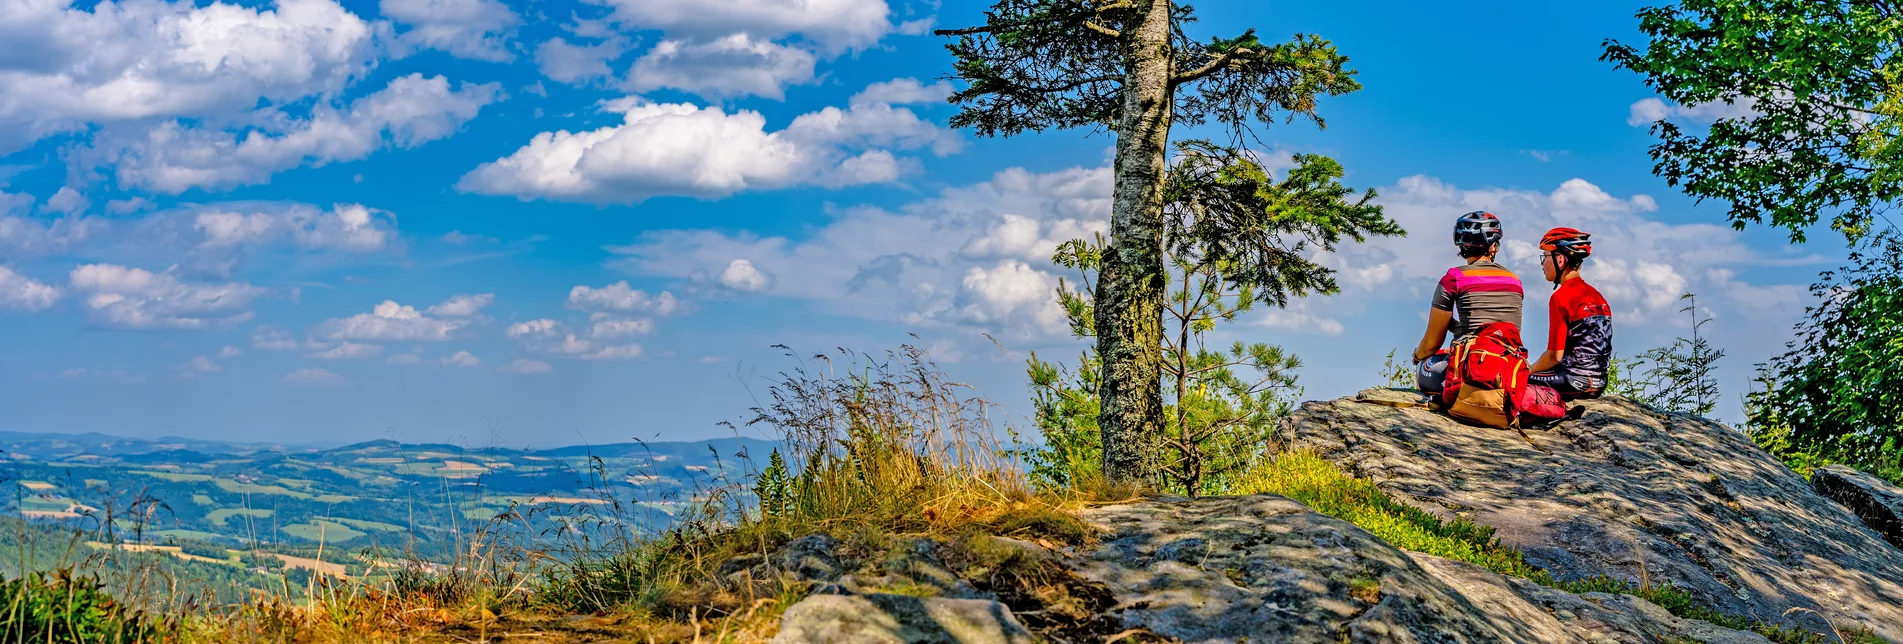 Mountain biking with a view in Wechselland in Eastern Styria | © Oststeiermark Tourismus | flotoanker